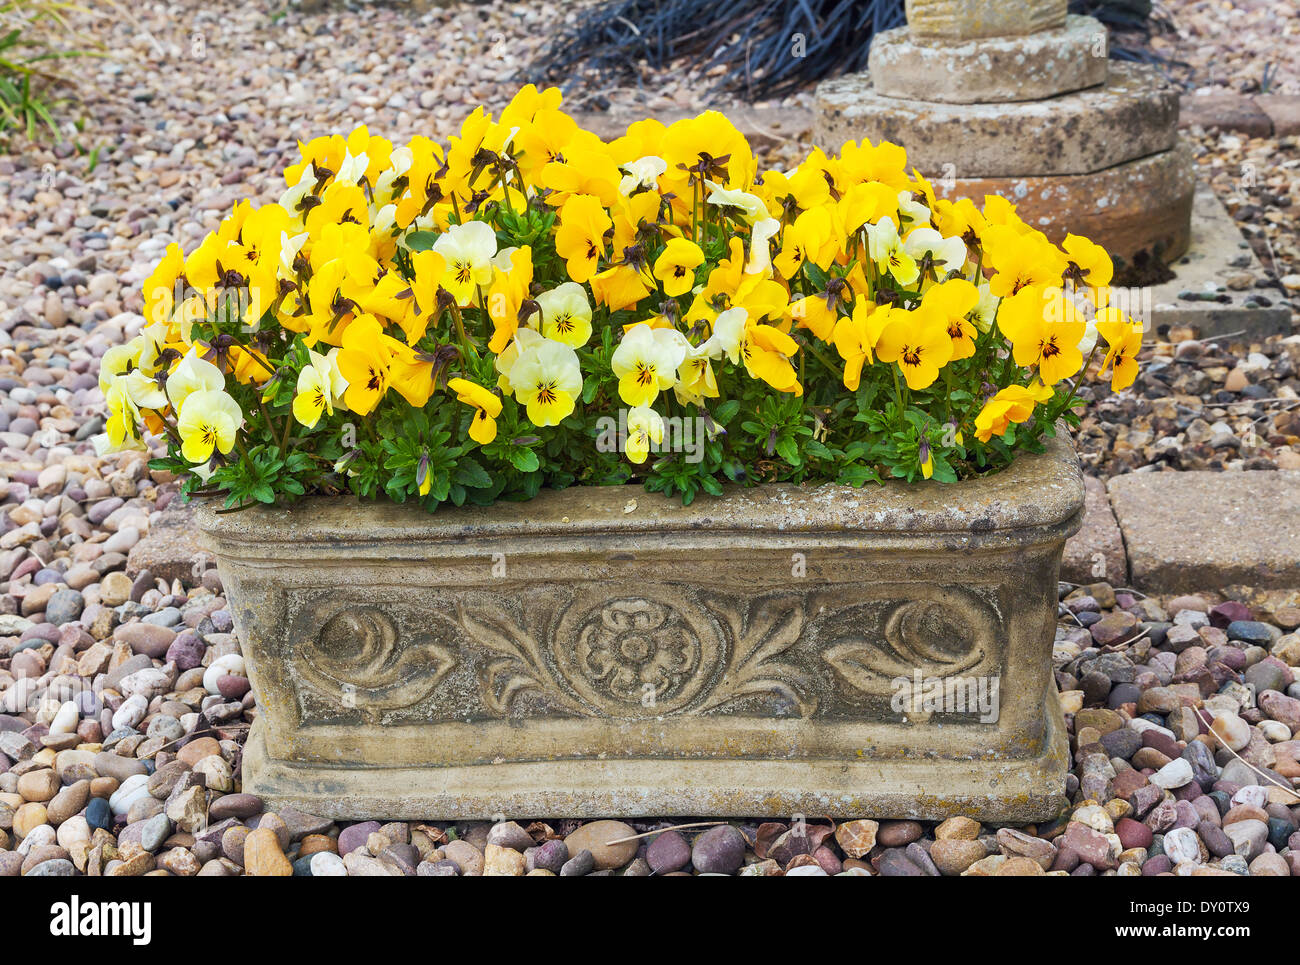 Winter flowering pansies in stone trough Stock Photo